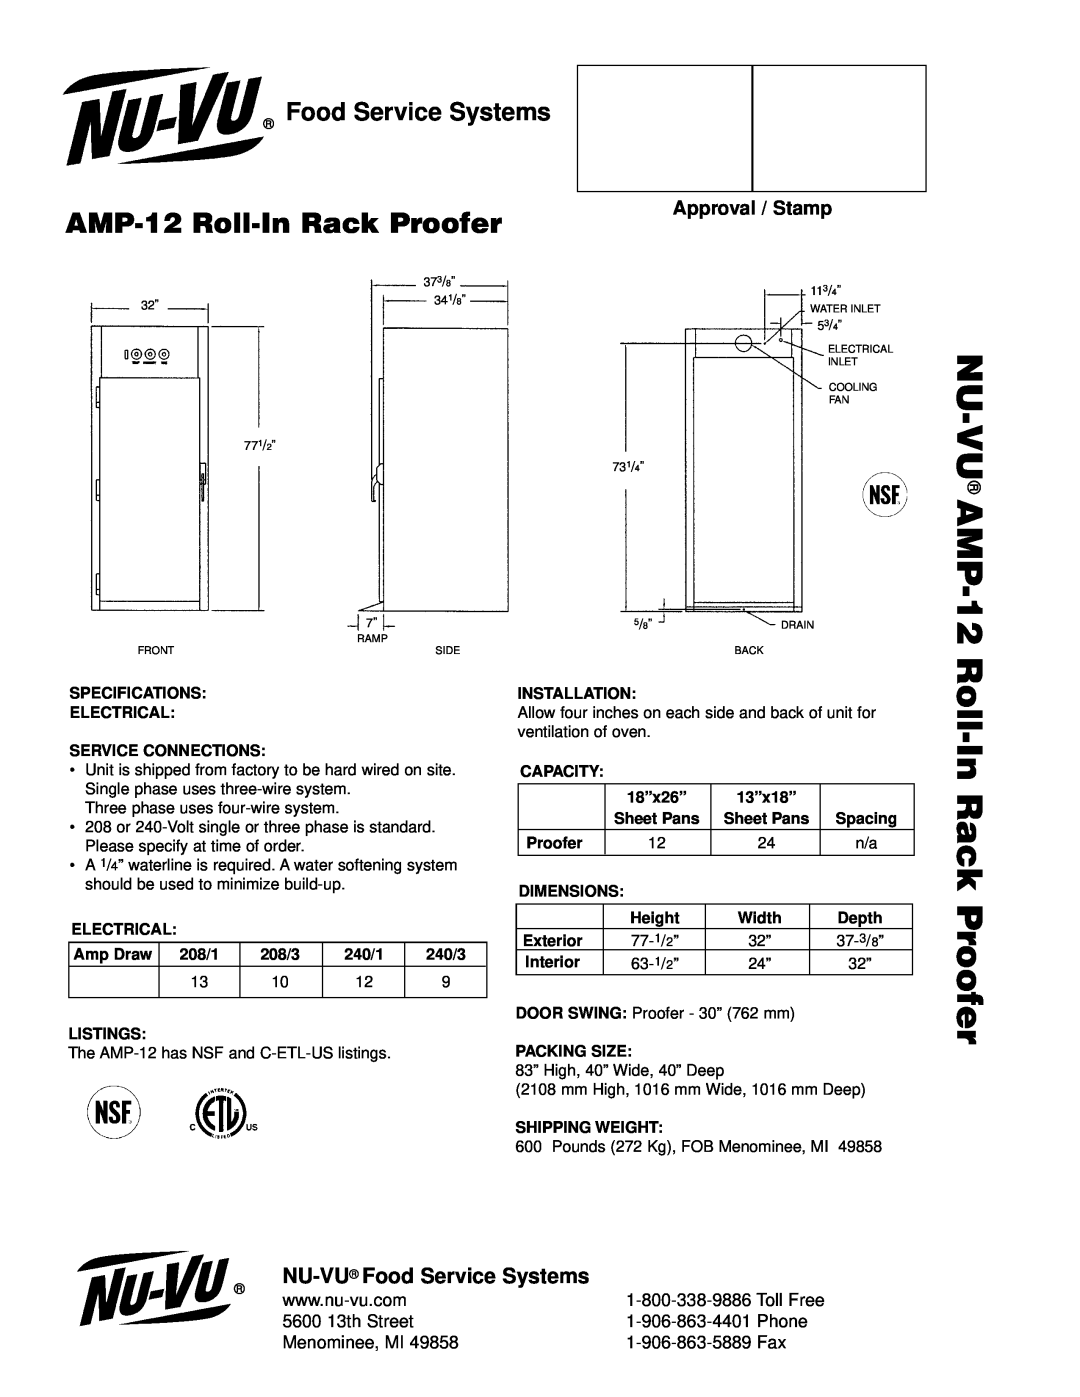 Nu-Vu NU-VU AMP-12, AMP-12 Roll-InRack Proofer, NU-VU Food Service Systems, Approval / Stamp, 5600 13th Street 